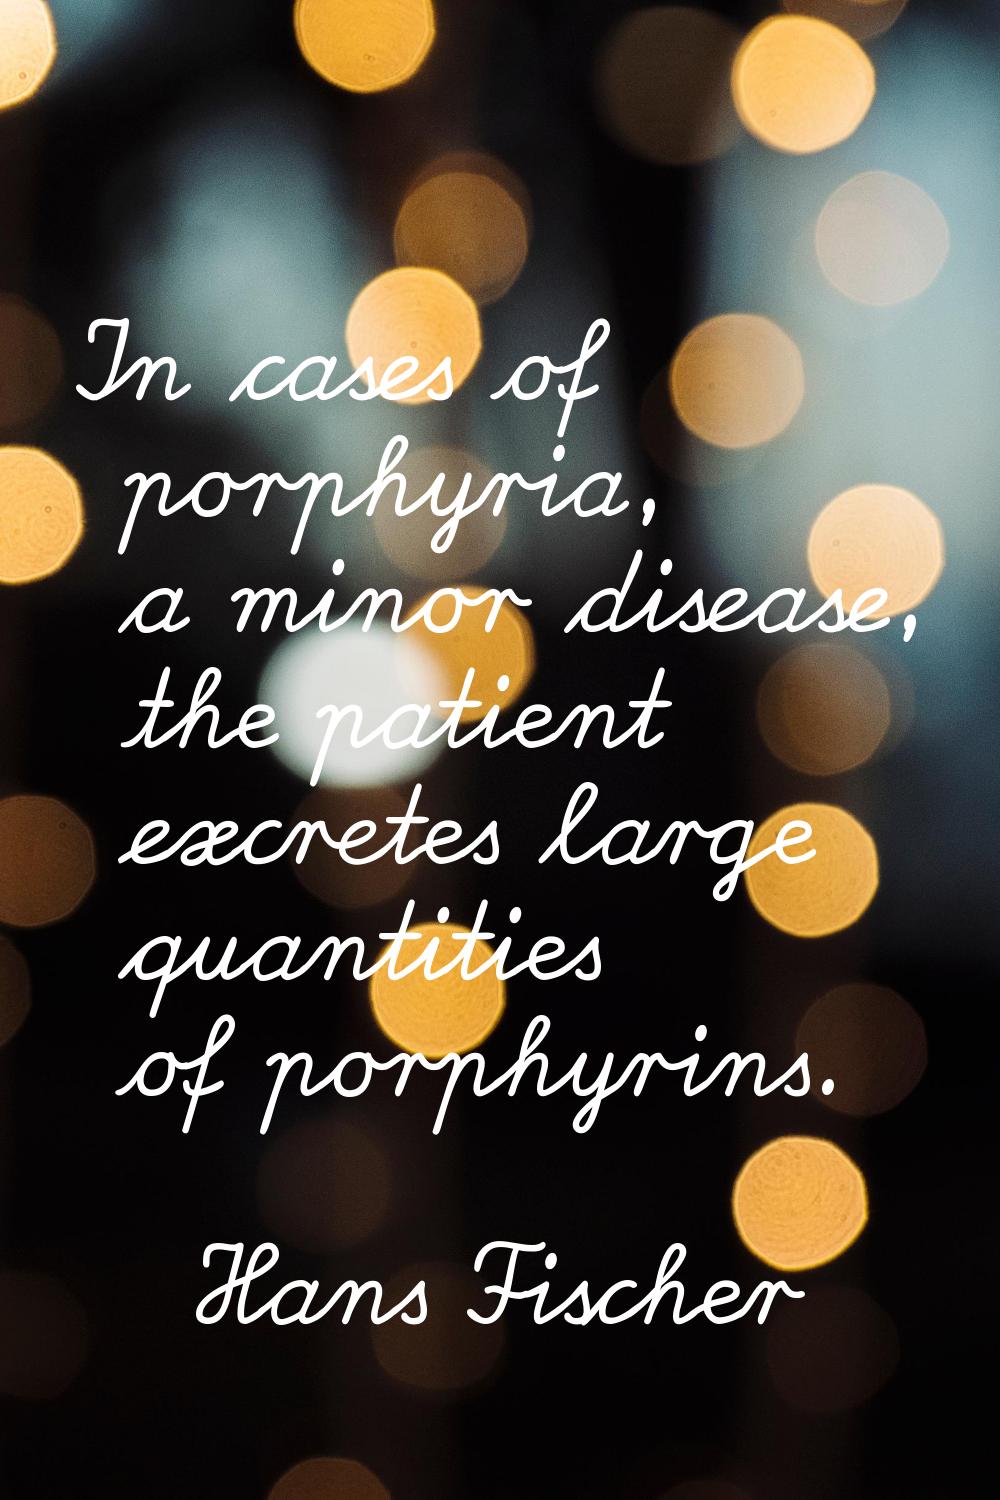 In cases of porphyria, a minor disease, the patient excretes large quantities of porphyrins.